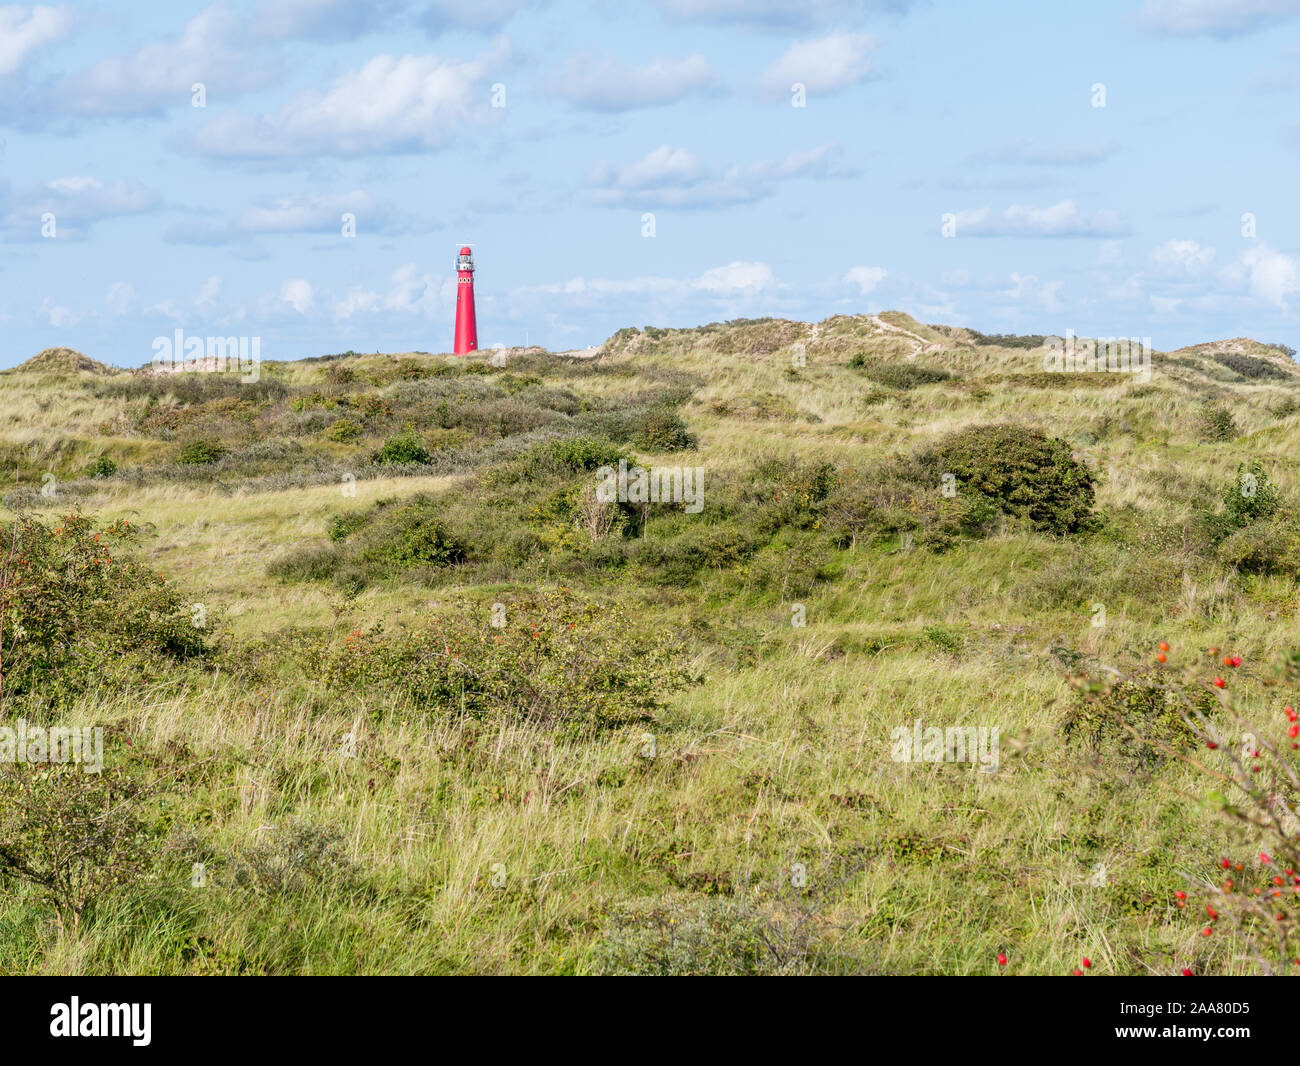 North tower lighthouse in Westerduinen dunes of Frisian island Schiermonnikoog, Netherlands Stock Photo